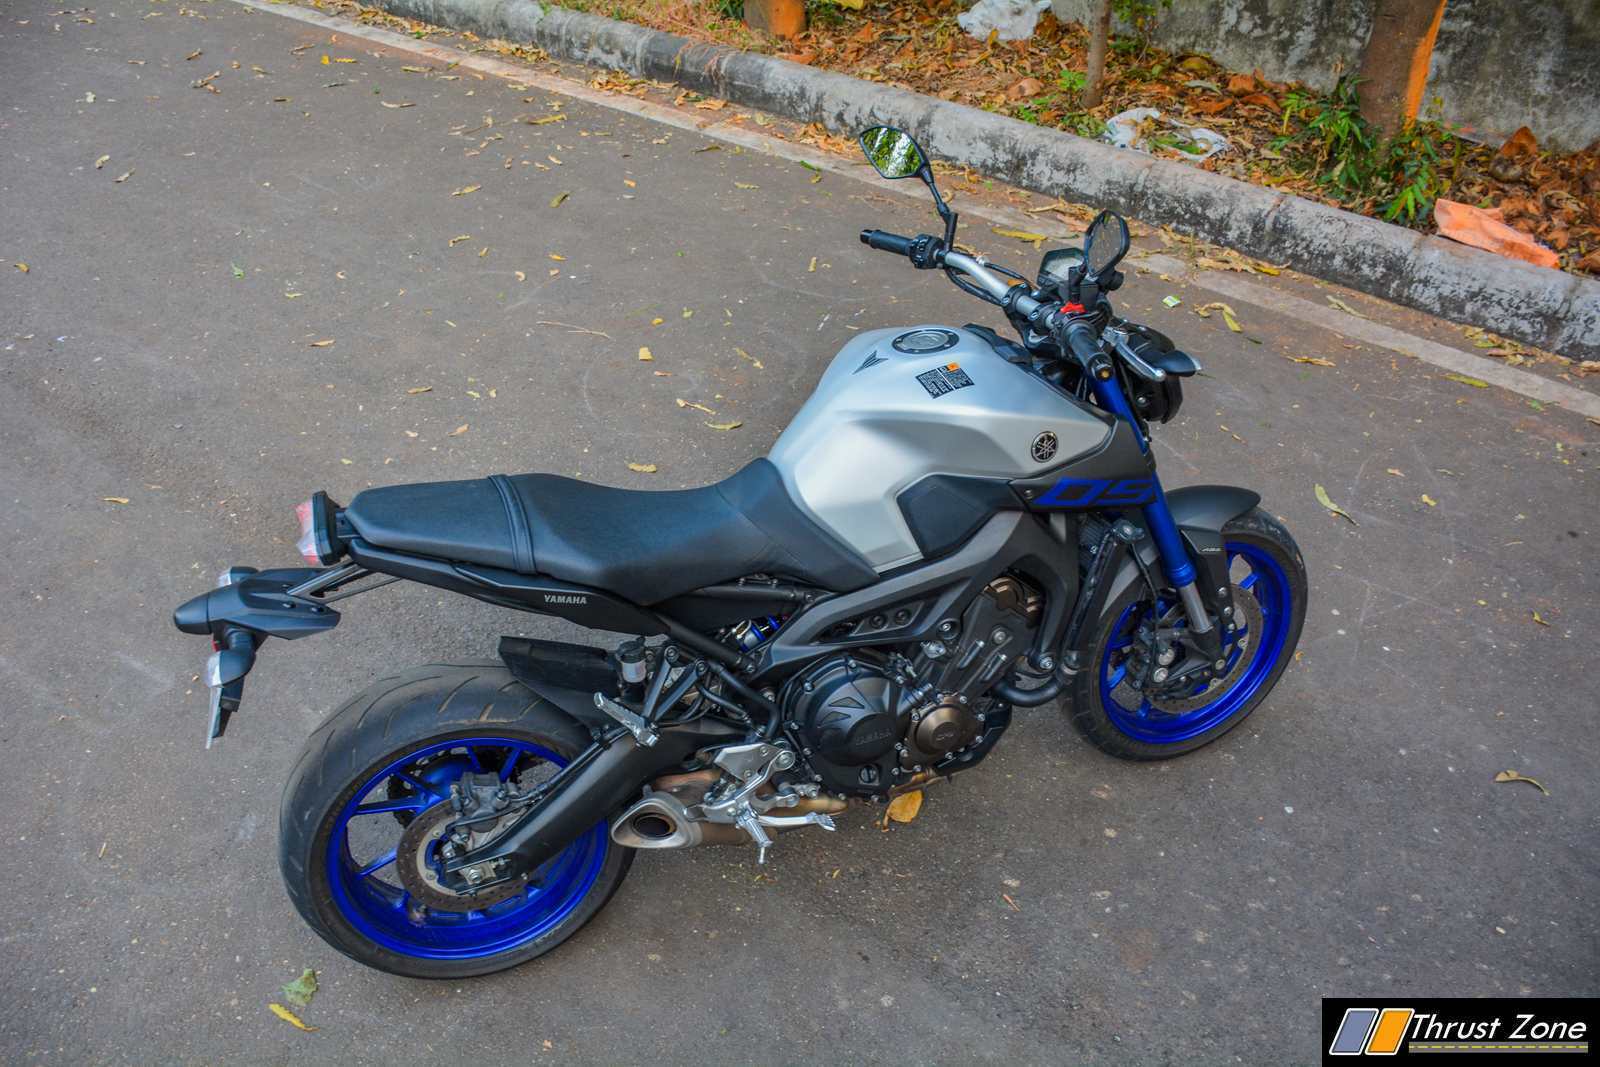 https://www.thrustzone.com/wp-content/uploads/2017/11/Yamaha-MT-09-India-Ride-Review-24.jpg